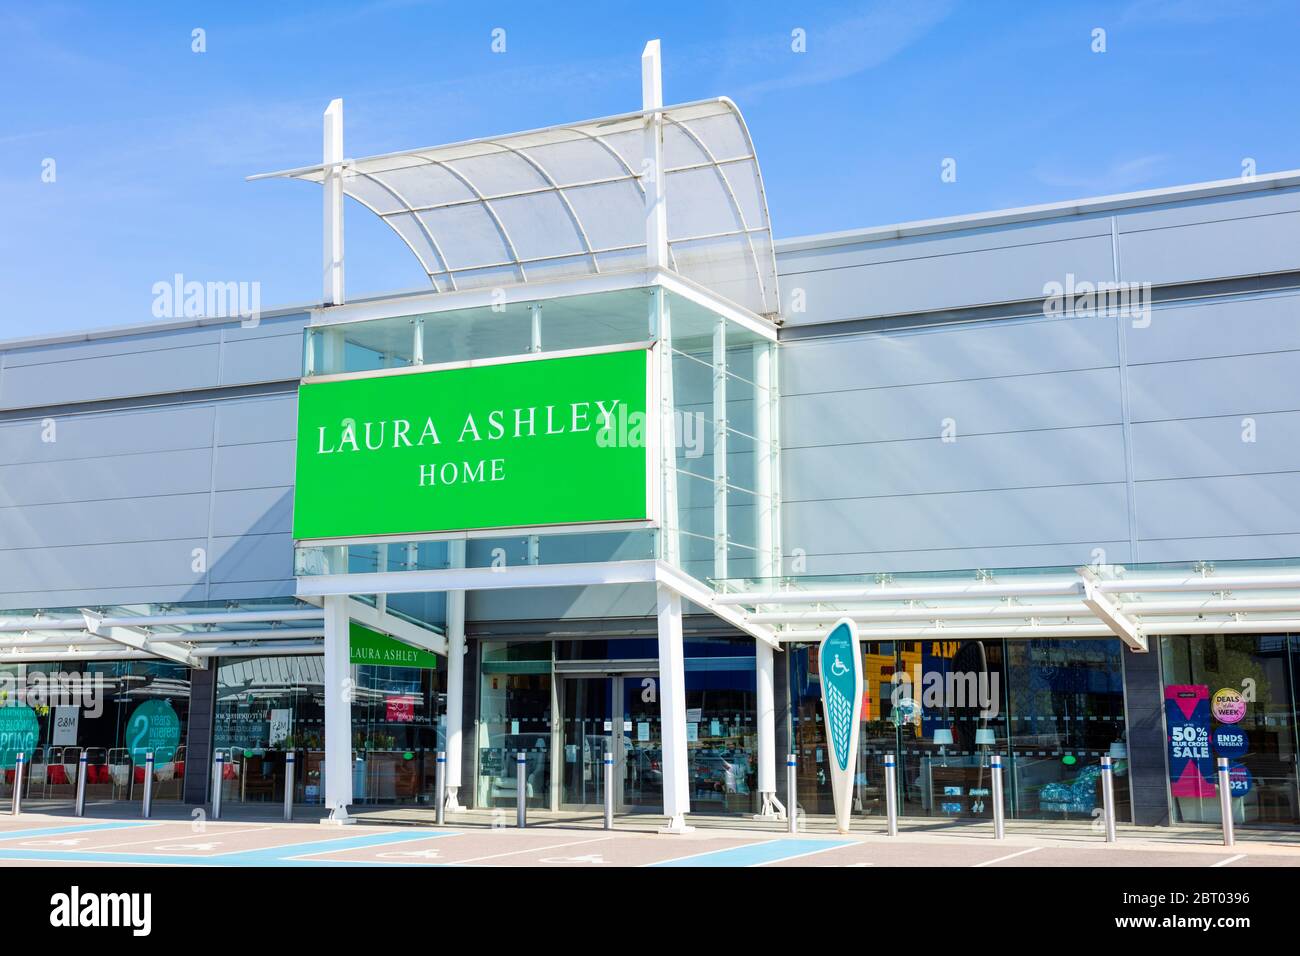 Laura Ashley Home Store Front Giltbrook Retail Park, Ikea Way, Giltbrook, Nottingham East Midlands England GB Europa Stockfoto